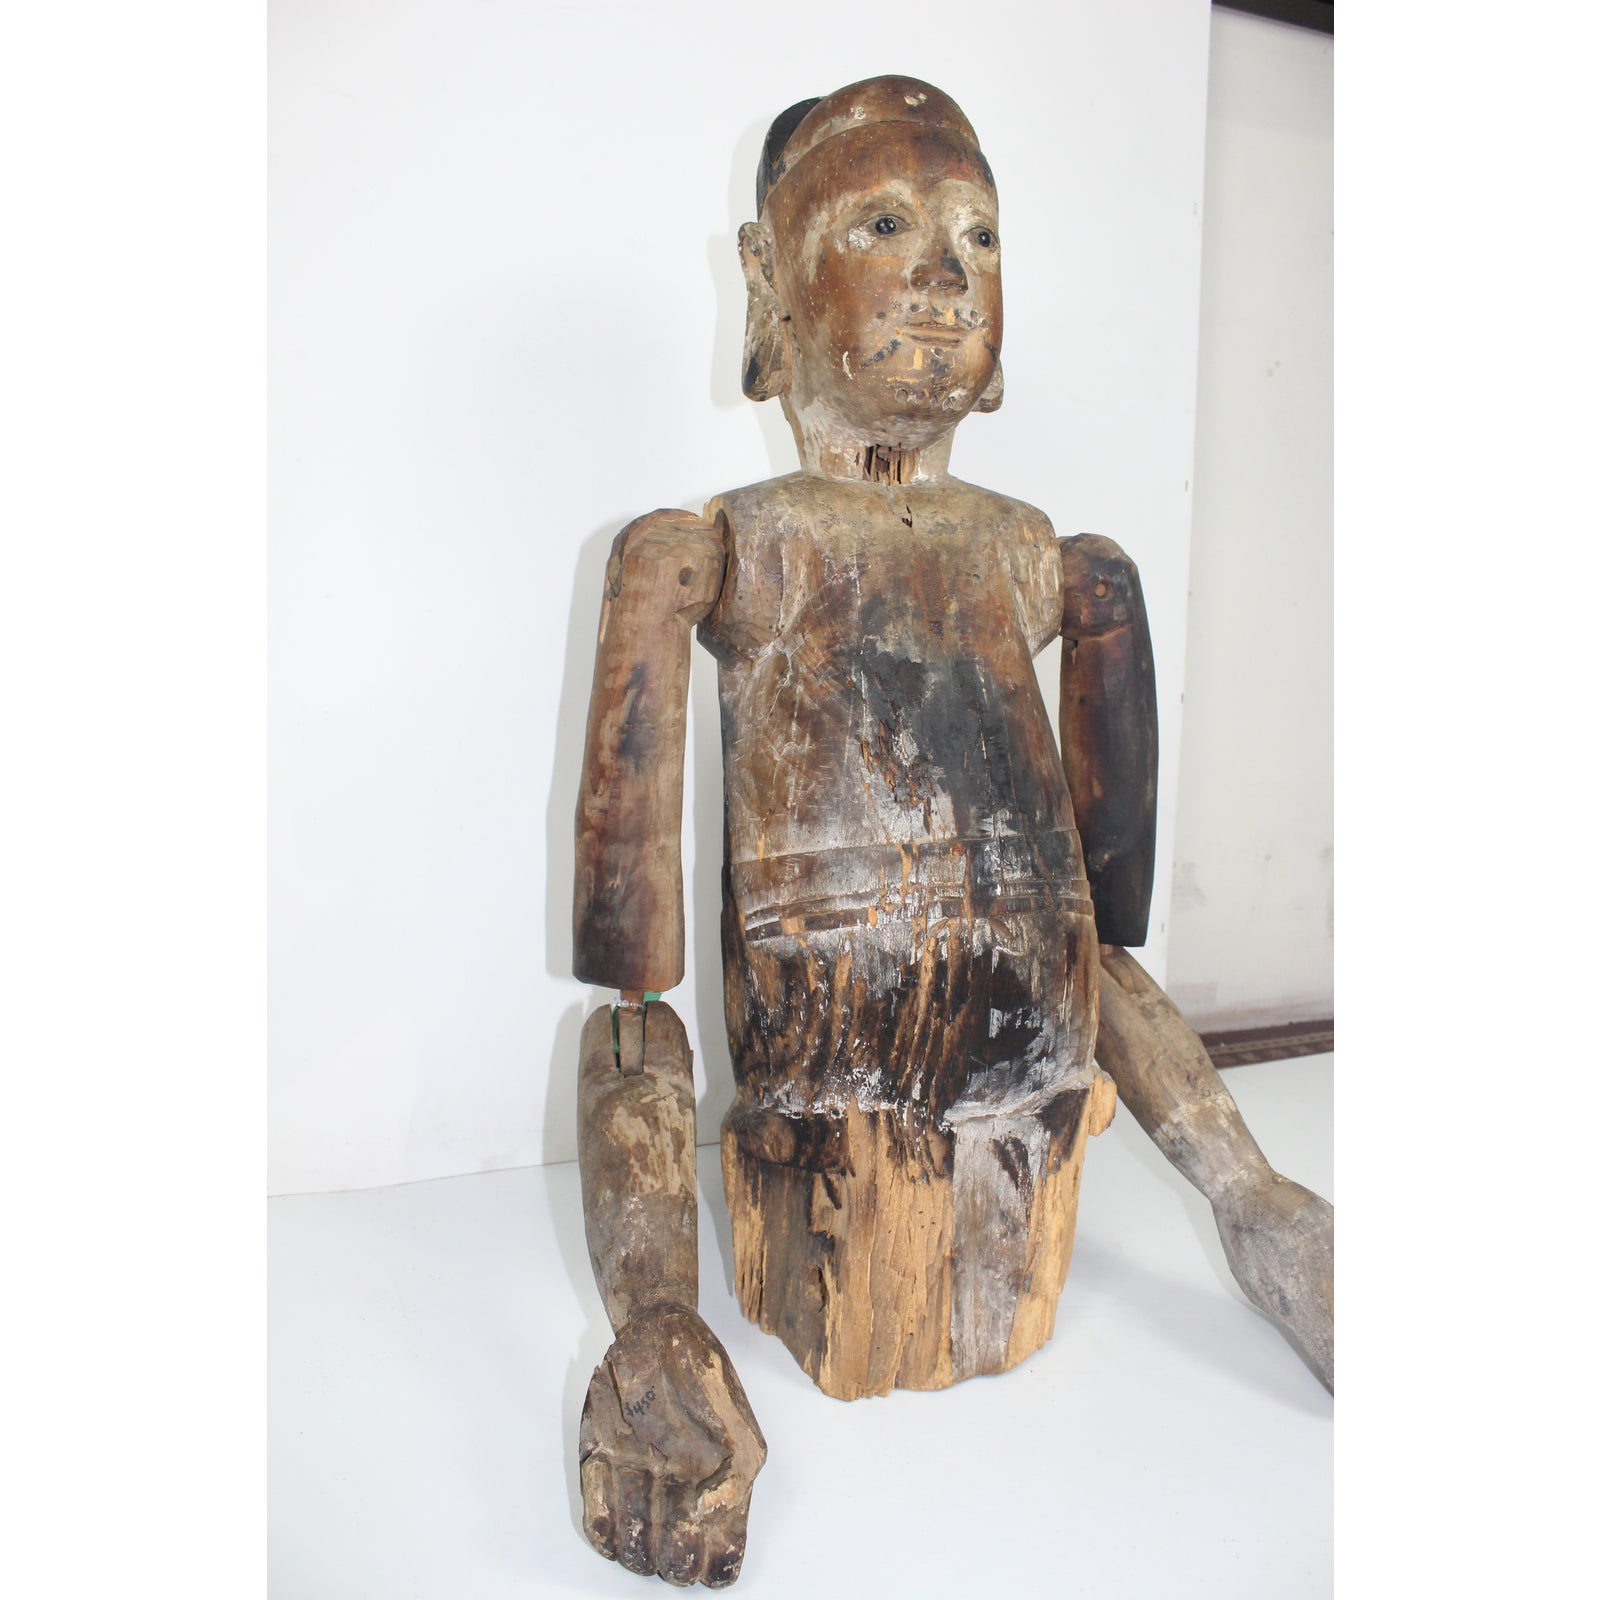 18ccentury-pacific-rim-carved-wooden-figure-sculpture-8711